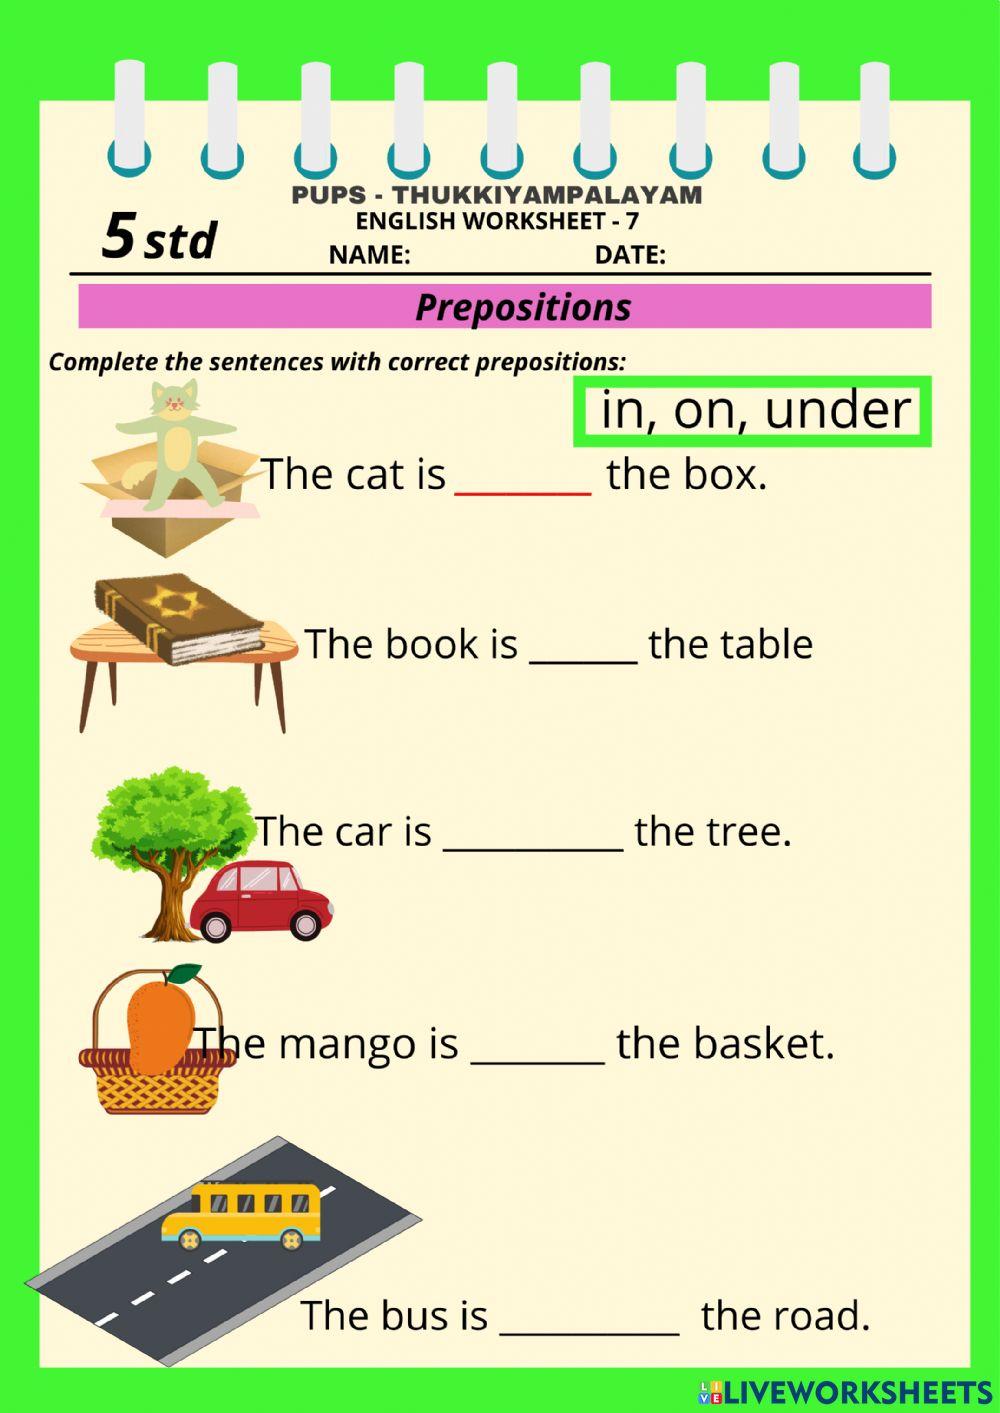 English prepositions fill ups